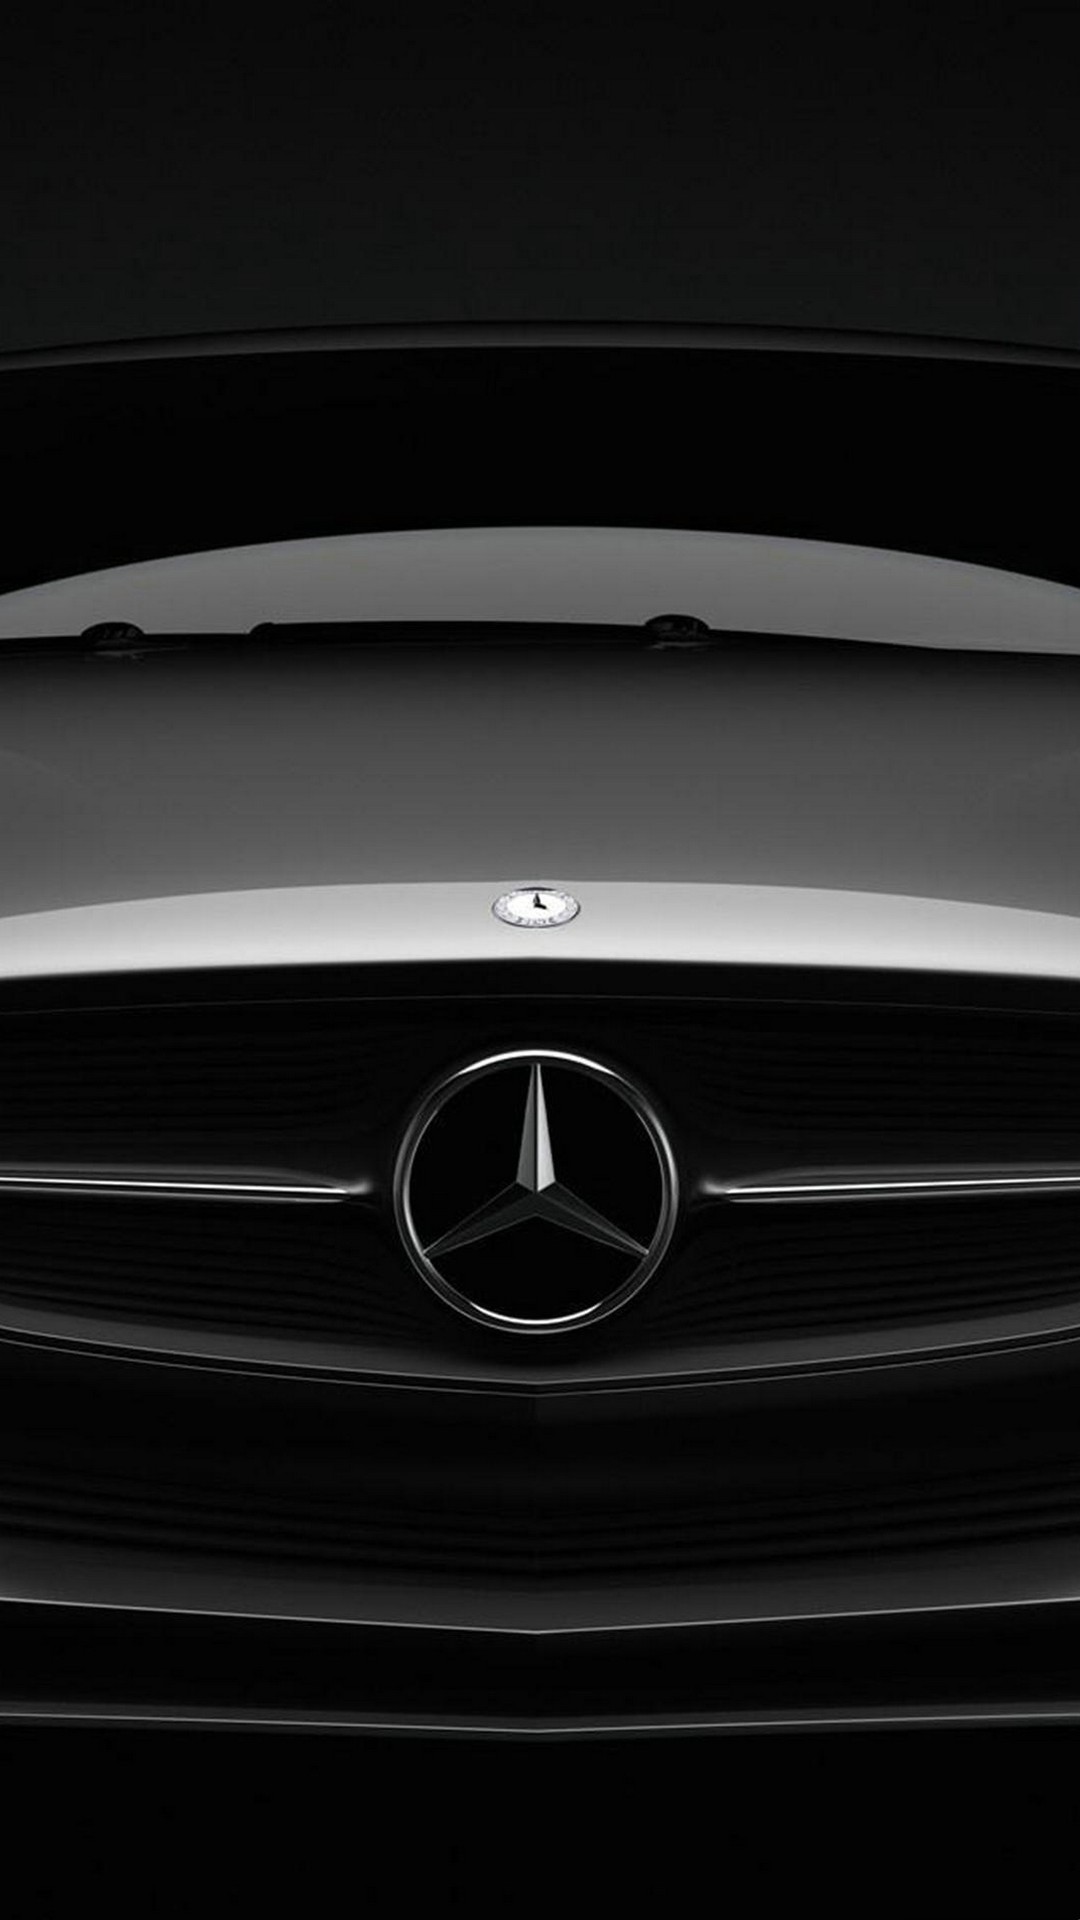 Mercedes Android Wallpaper HD - 2020